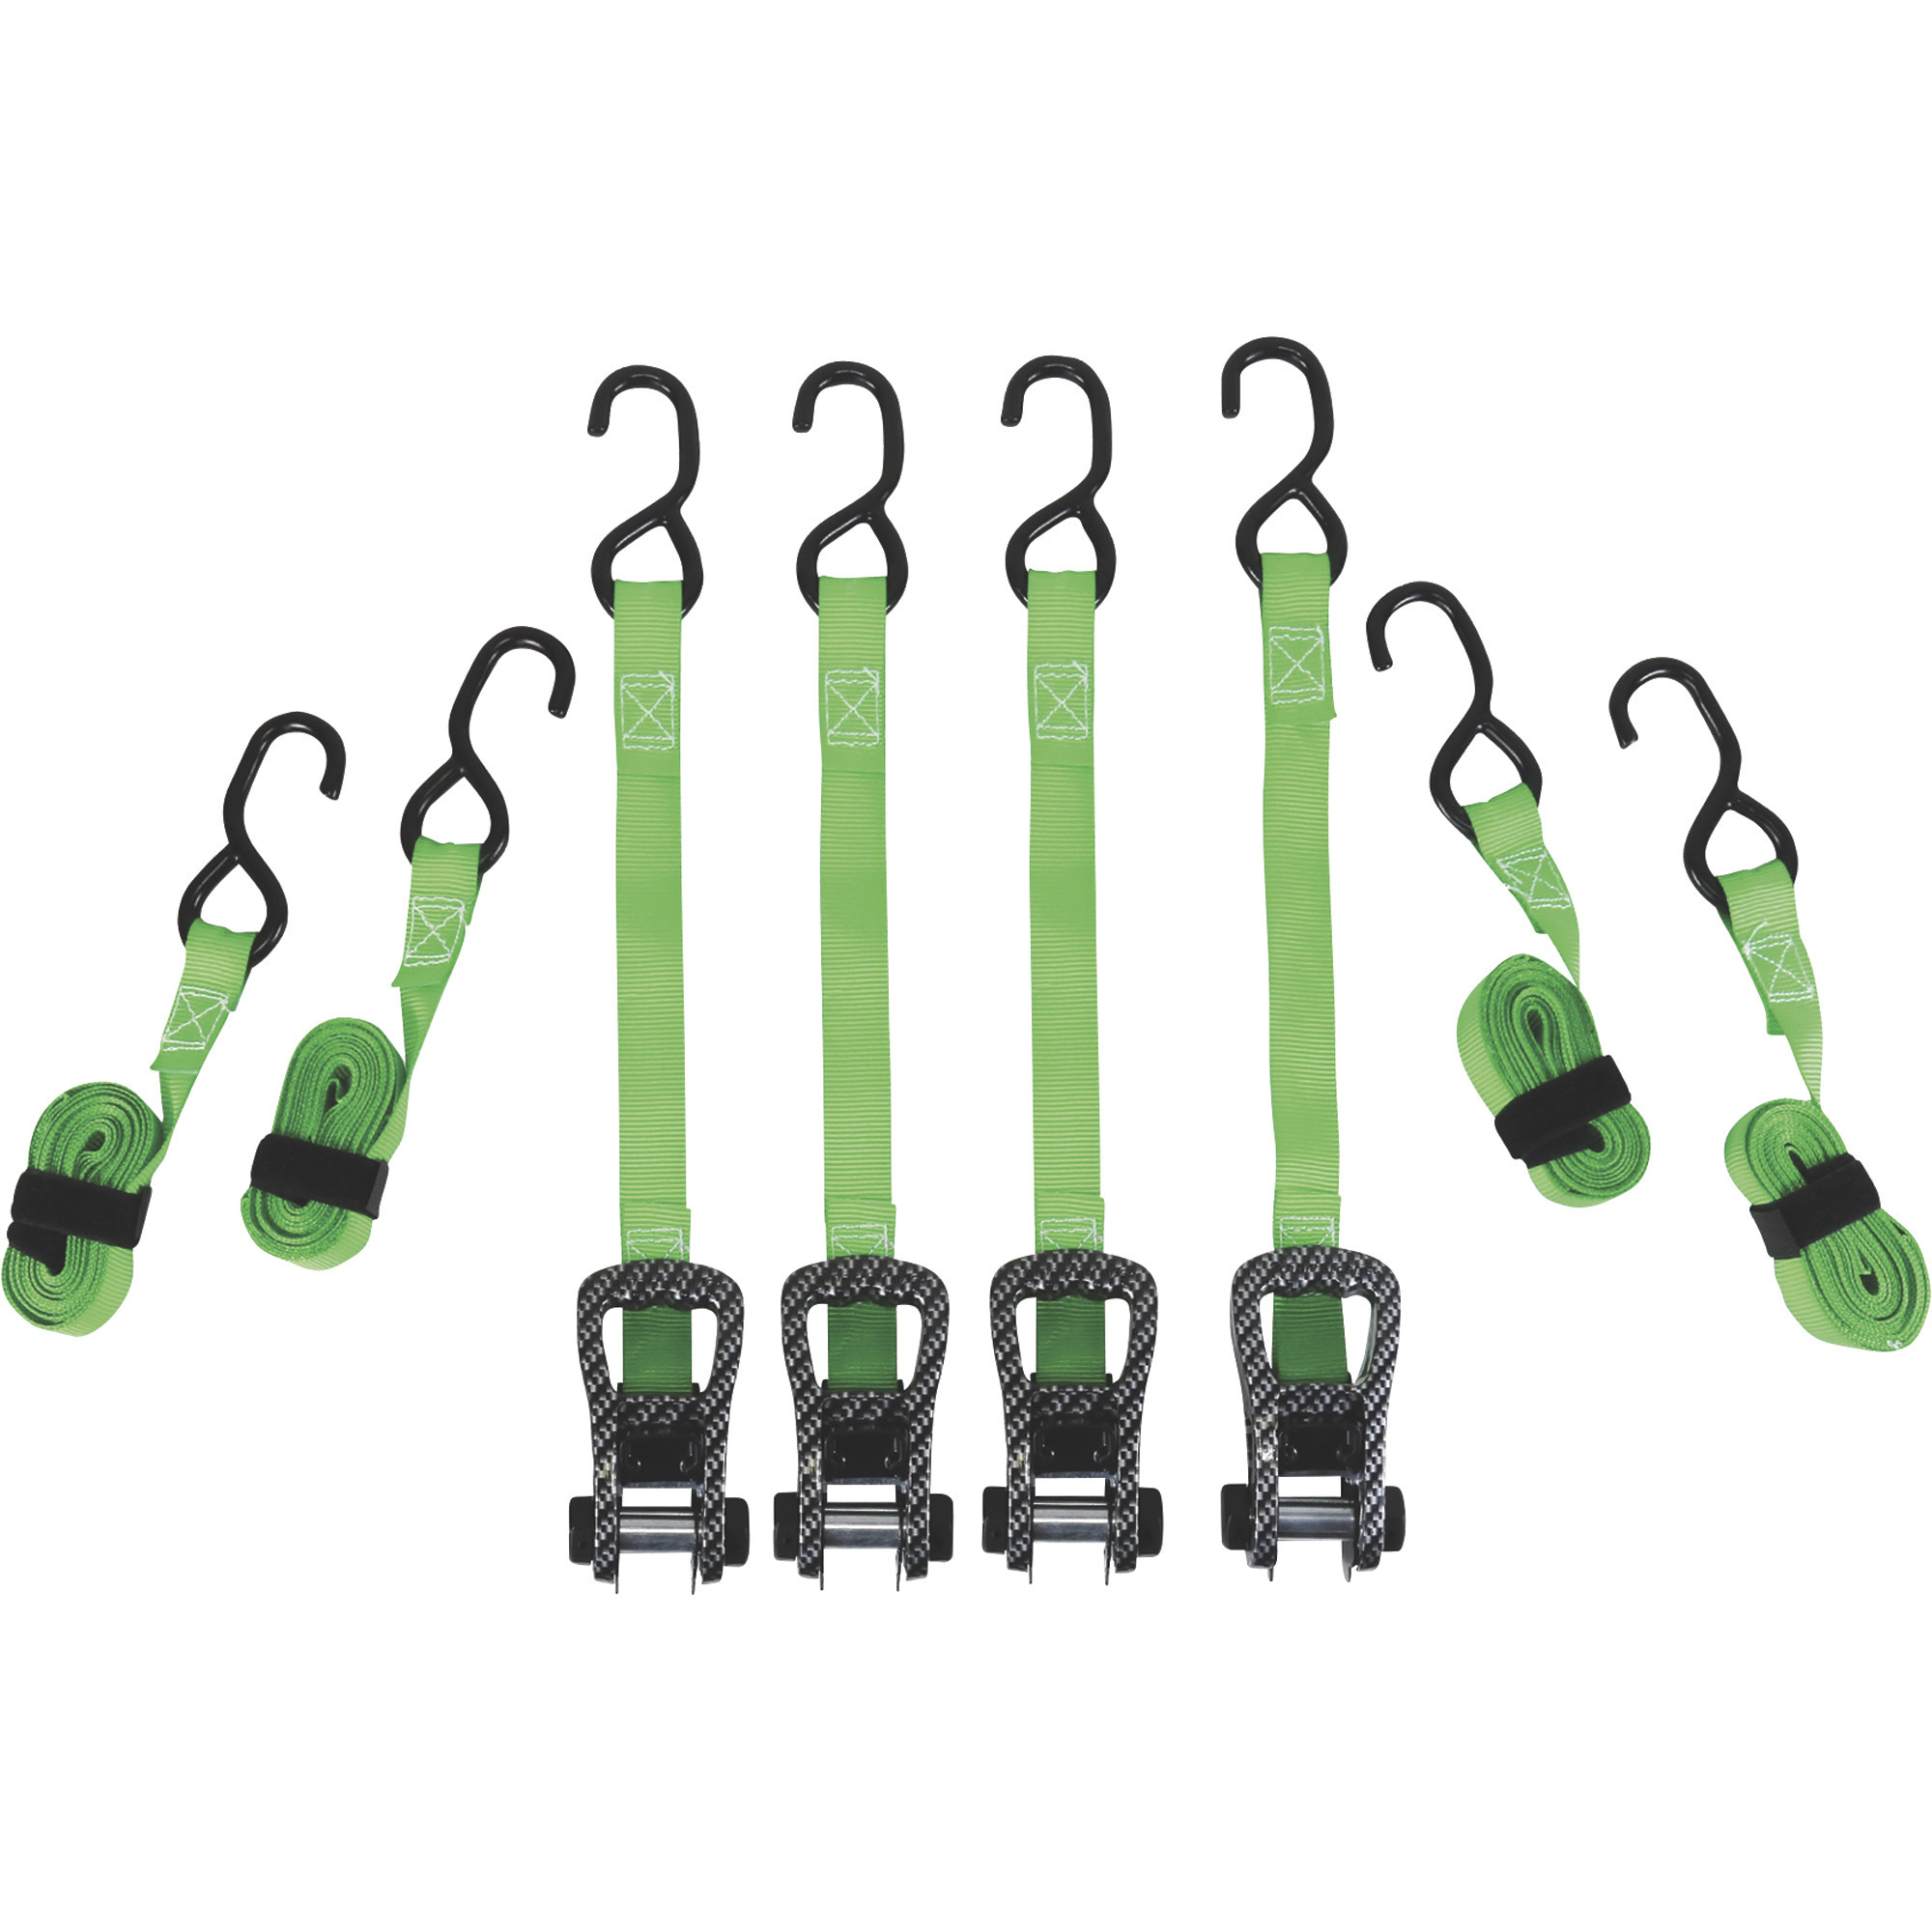 SmartStrap CarbonX Premium Ratchet Tie-Downs, 14ft.L, 4-Pack, 1,500-Lb. Breaking Strength, Green, Model 245